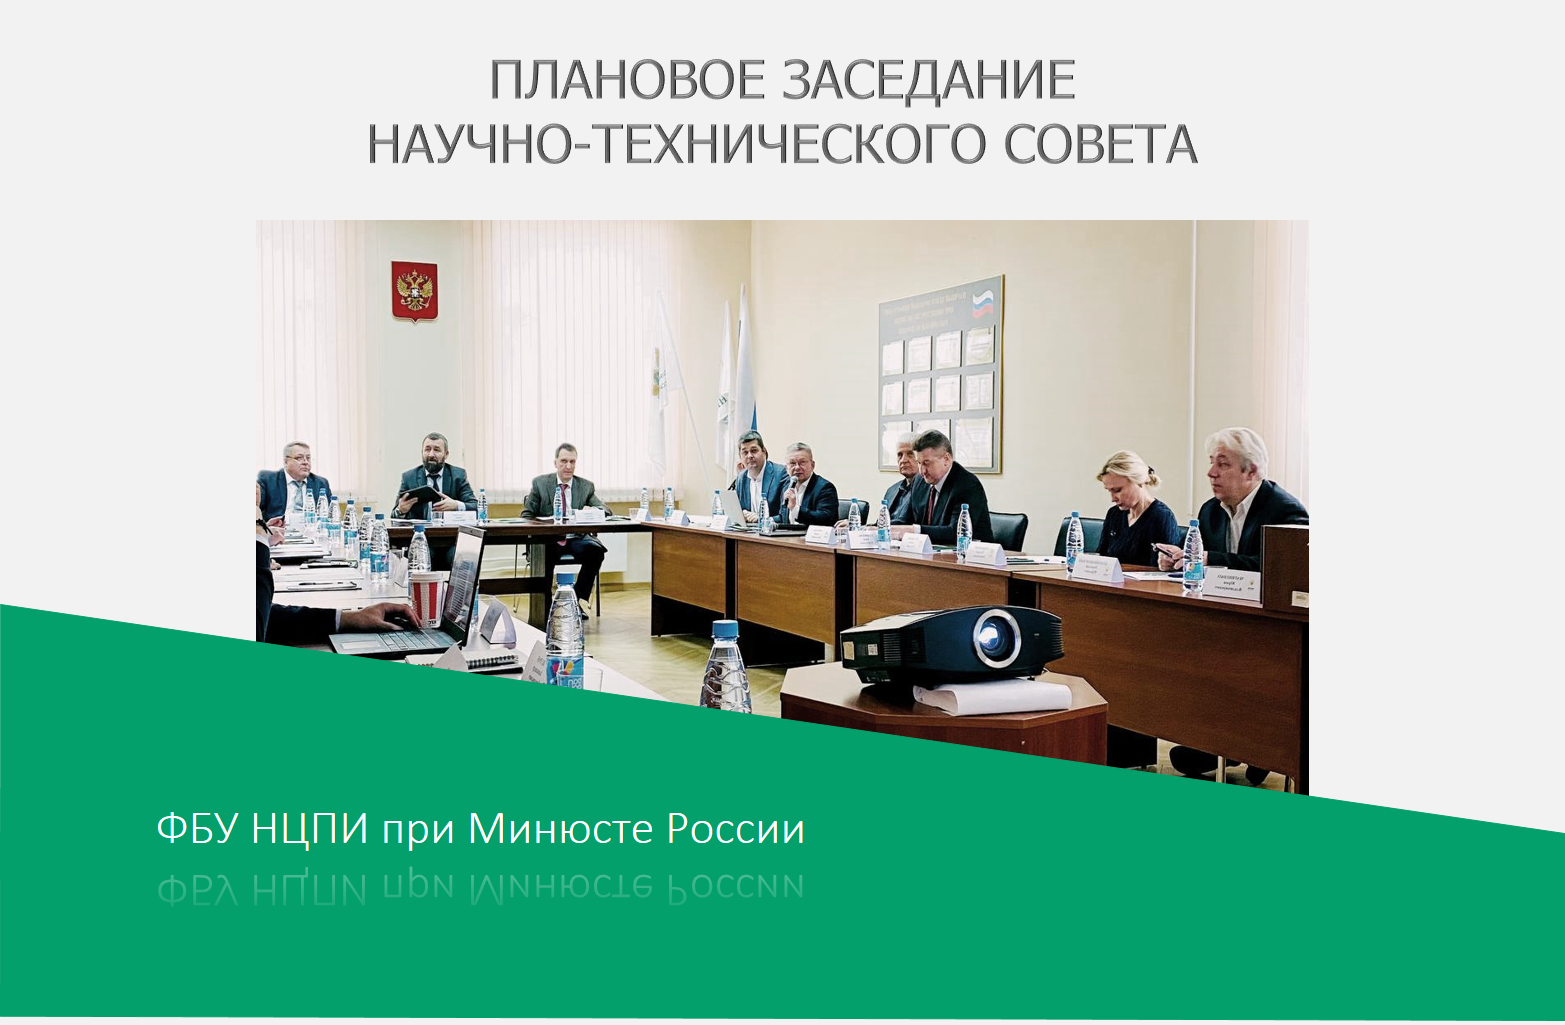 Научно-технический совет ФБУ НЦПИ при Минюсте России